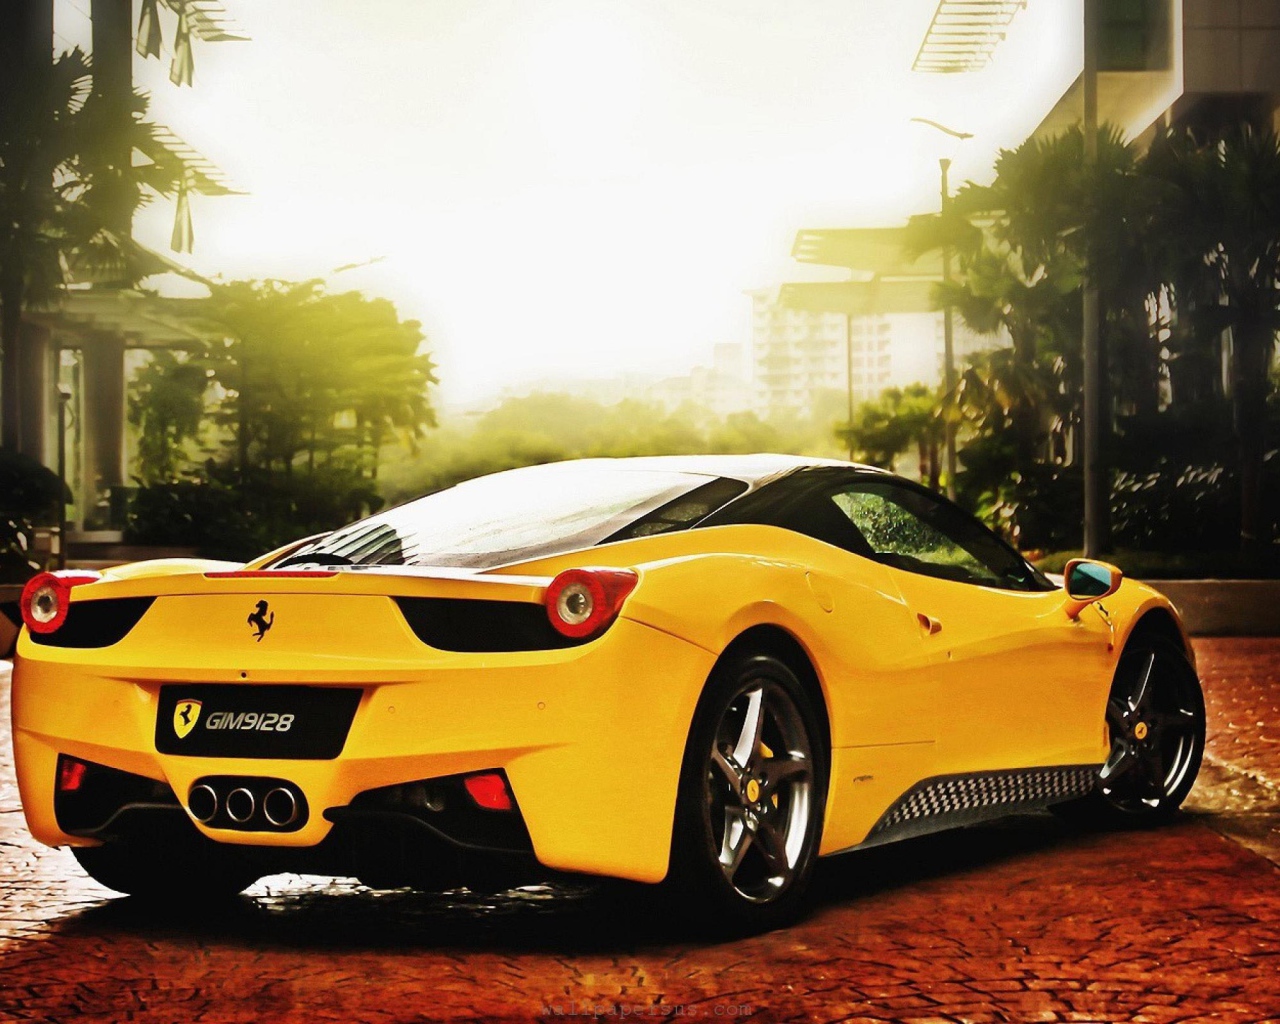 Желтый Ferrari 458 на брусчатке улицы